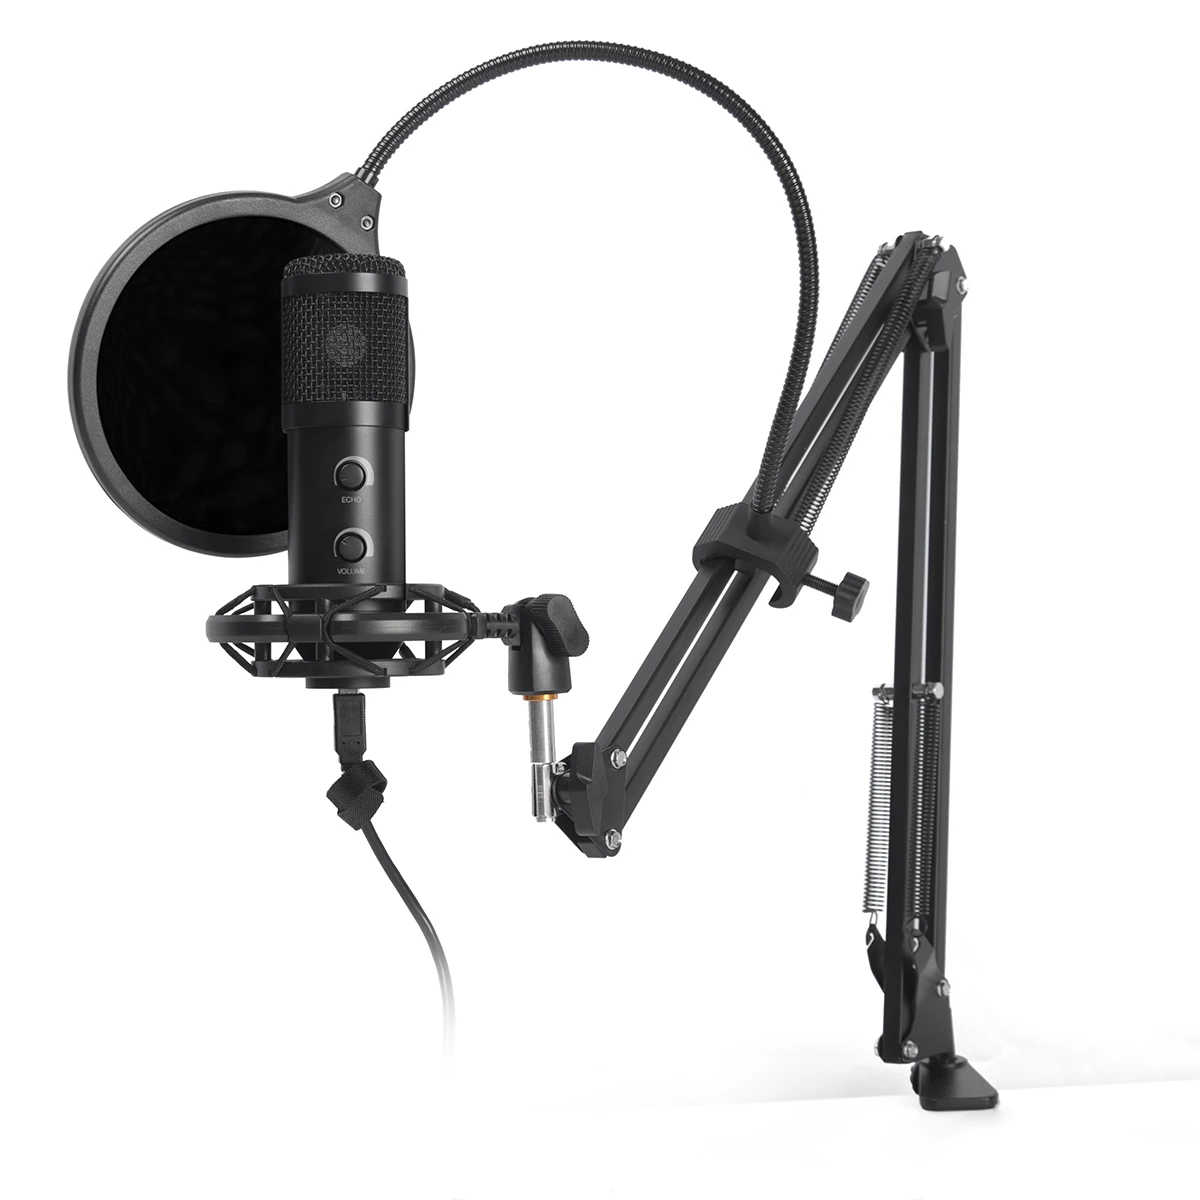 

Flyday OEM T058b professional Studio Microphone Live Streaming Microfono condensador Gaming Condenser mic kit